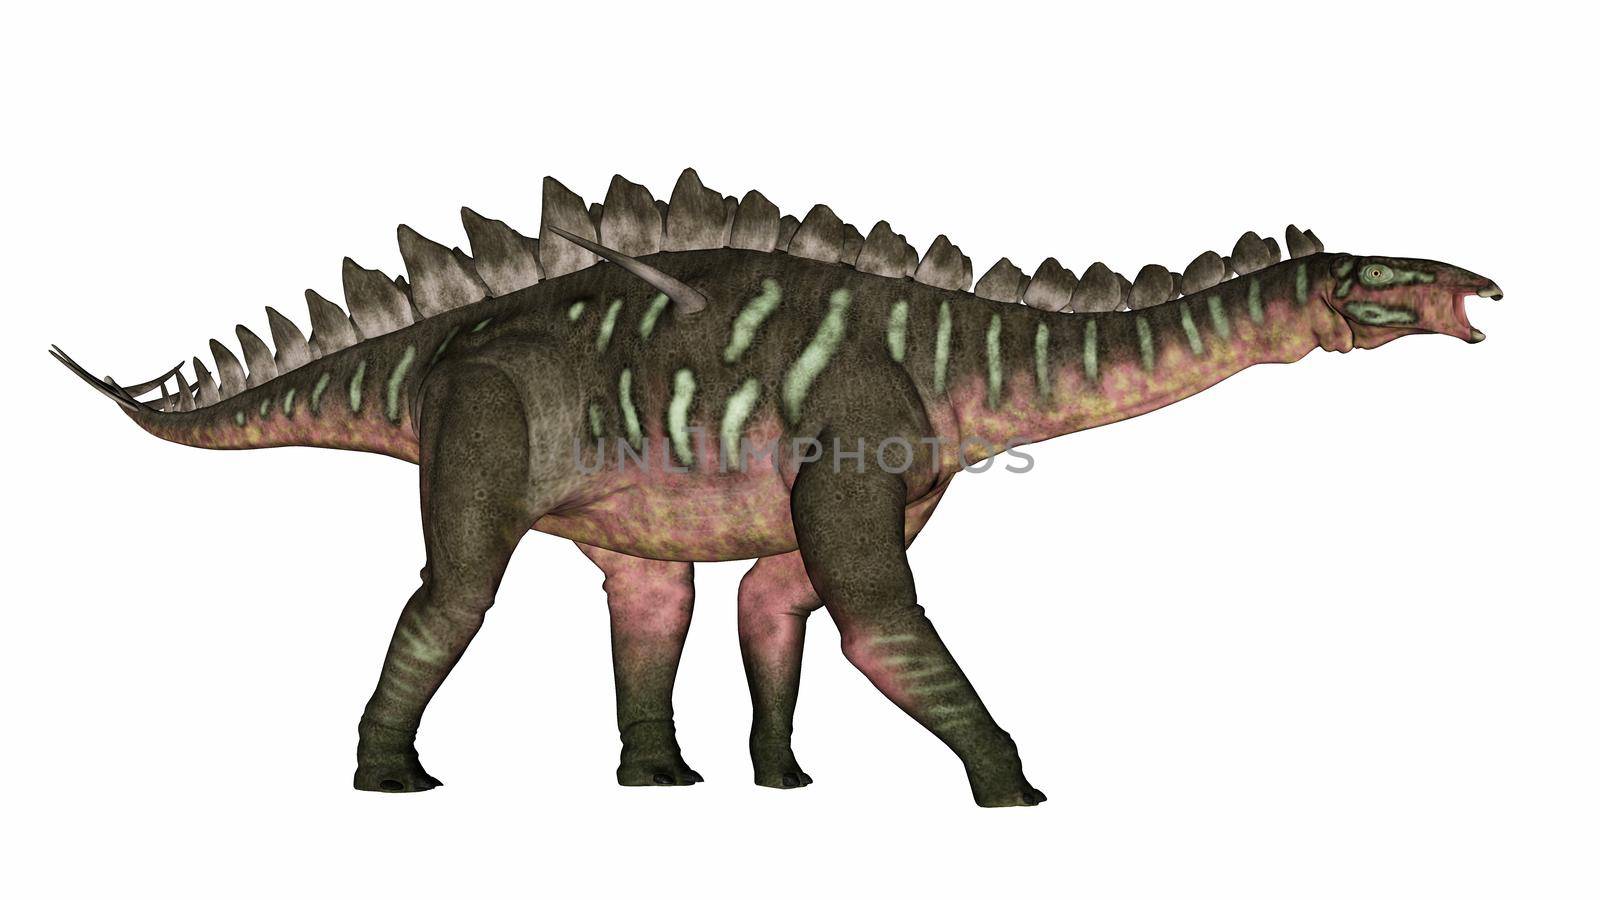 Miragaia dinosaur walking mouth open - 3D render by Elenaphotos21